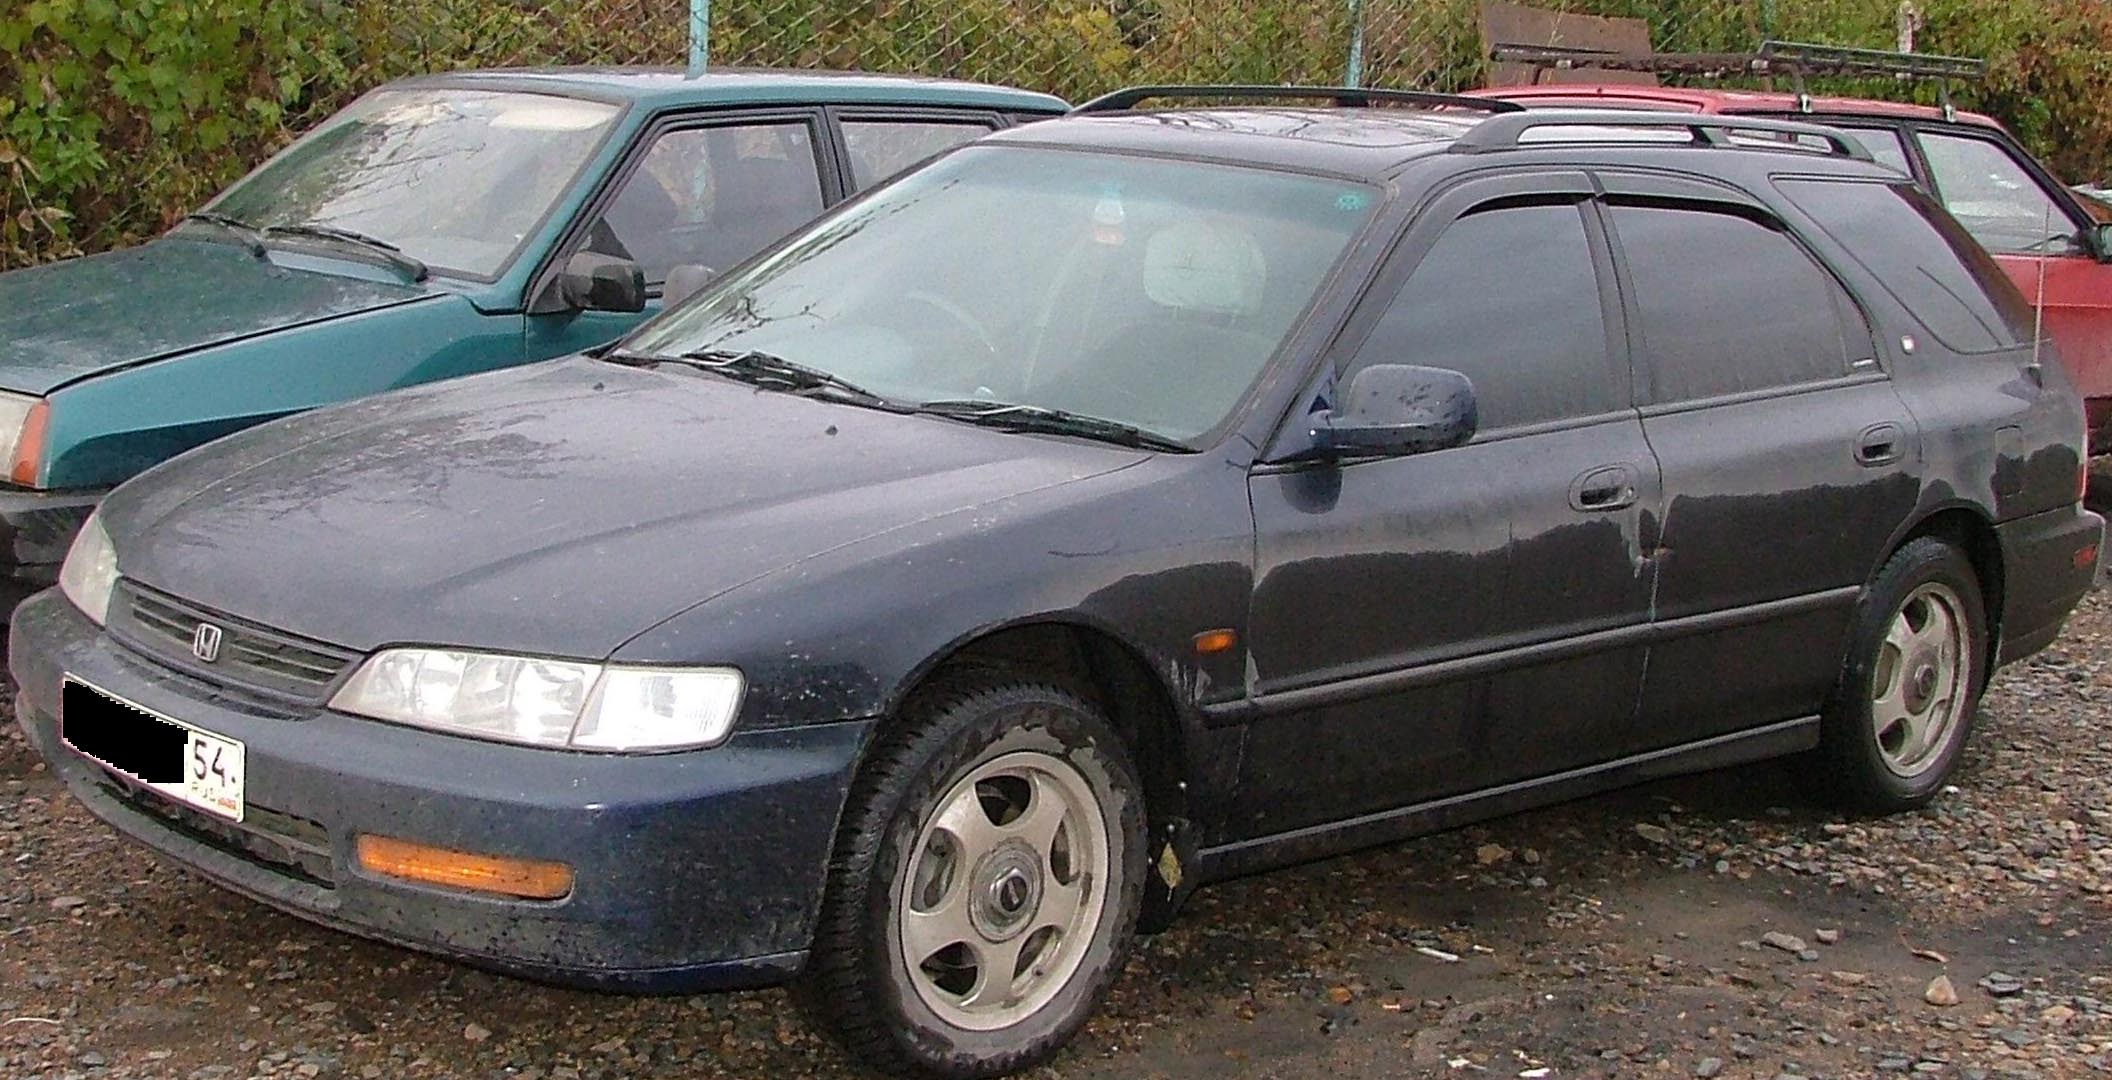 Honda Accord Wagon 1995